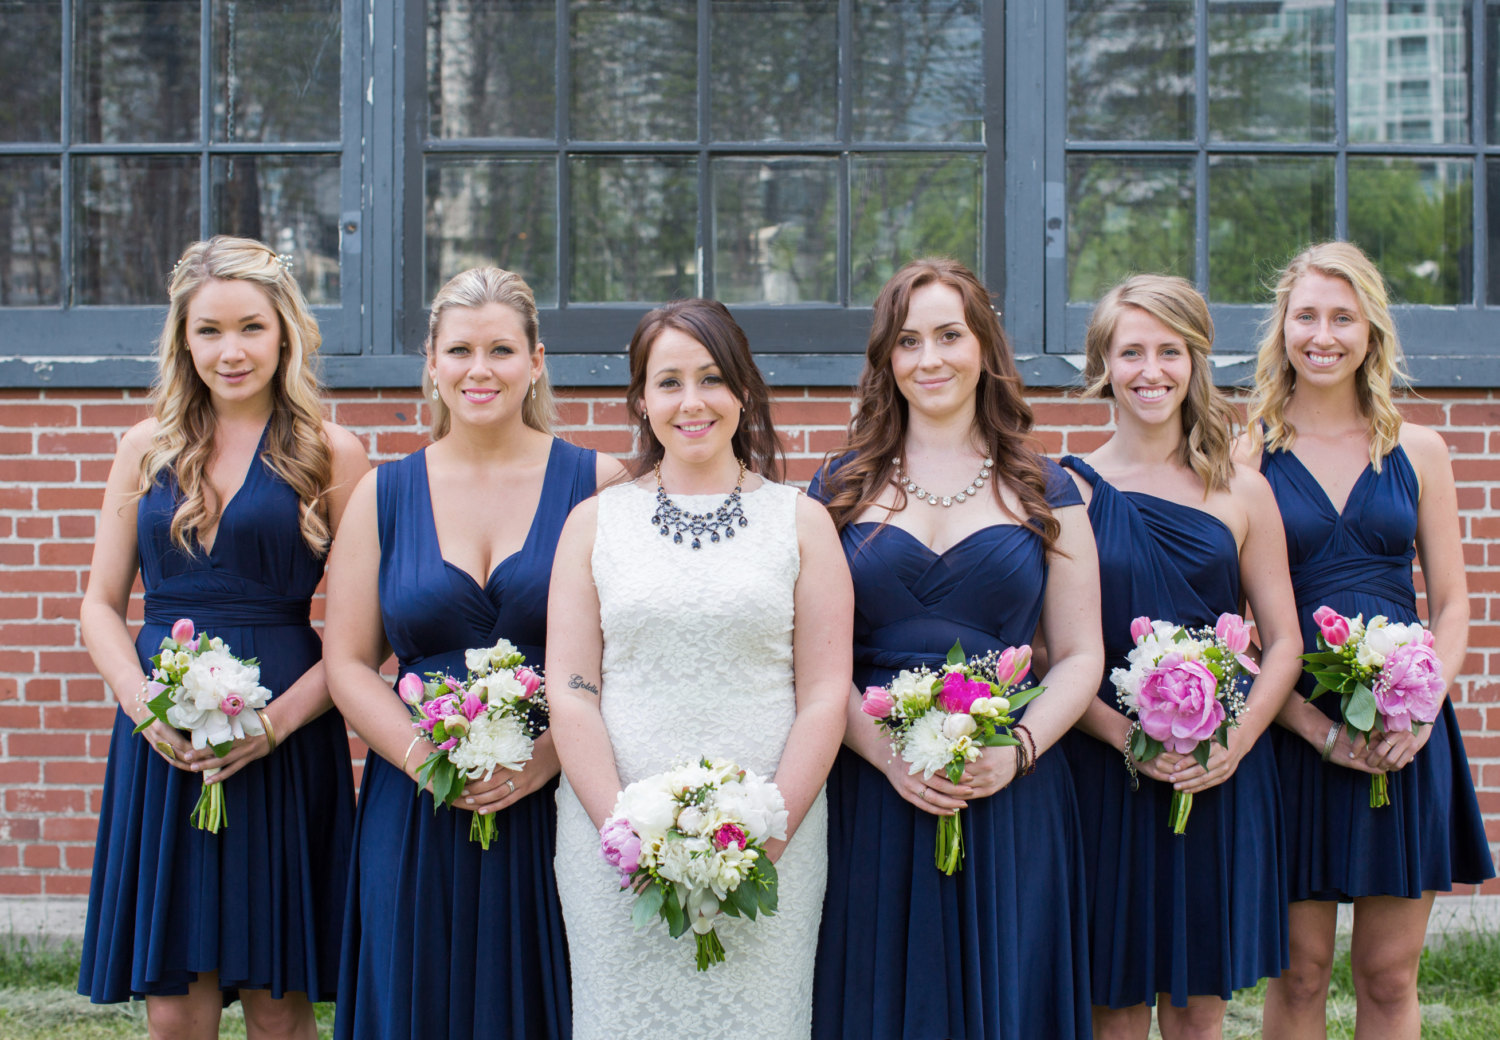 blue convertible bridesmaid dress | via https://emmalinebride.com/bridesmaids/bridesmaid-dress-worn-different-ways/